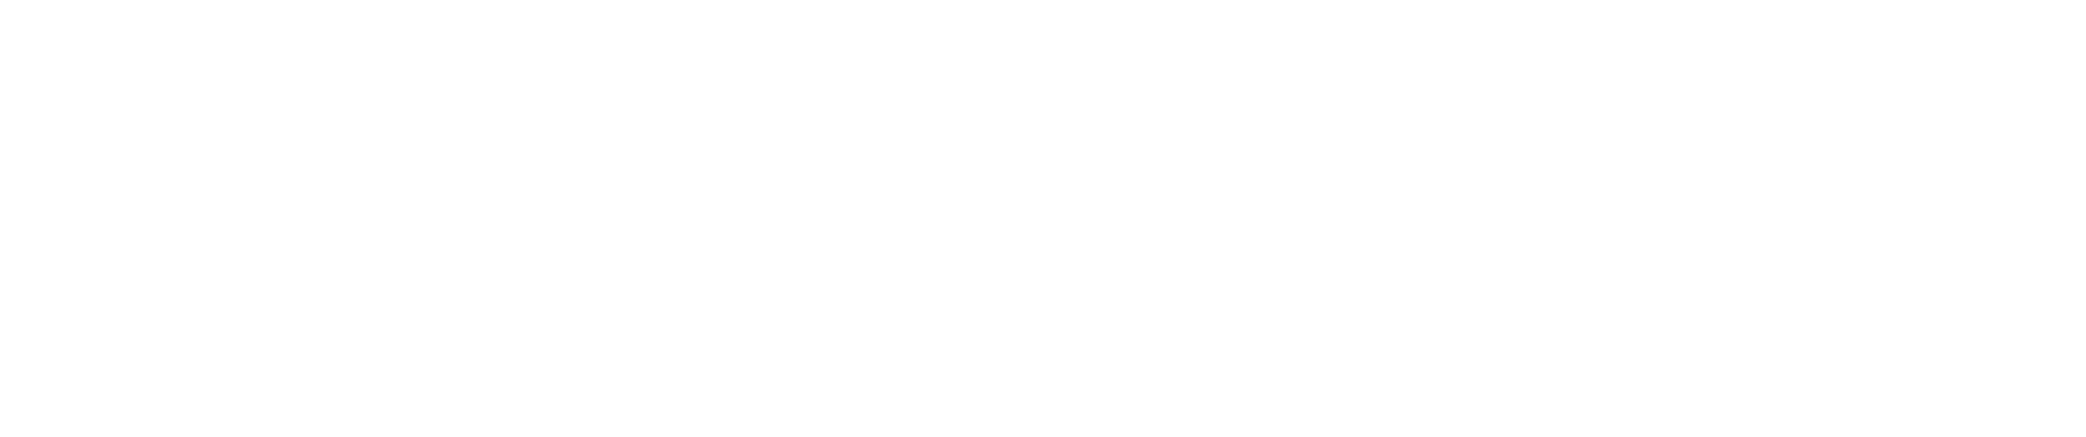 UCLA Health Logo